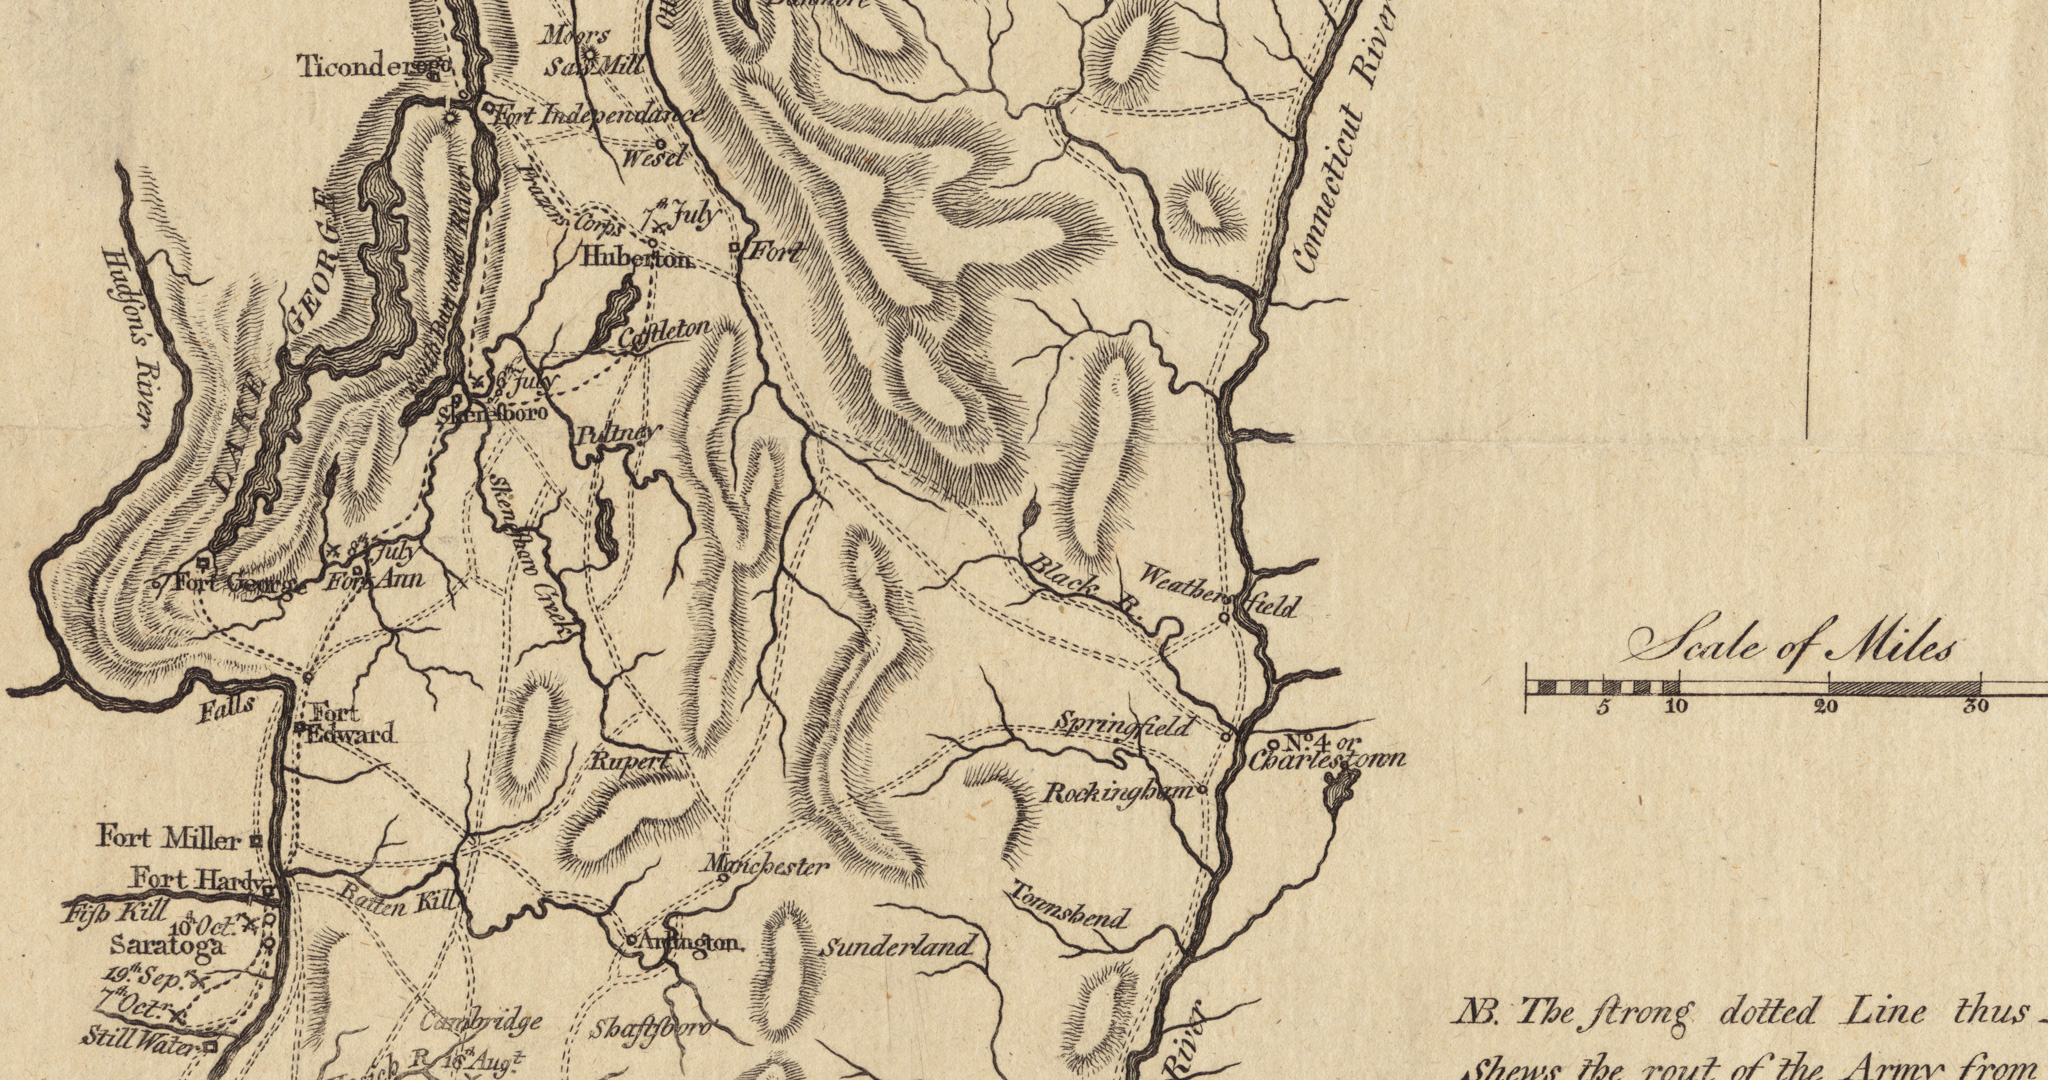 1777 Map showing Burgoyne's March to Saratoga